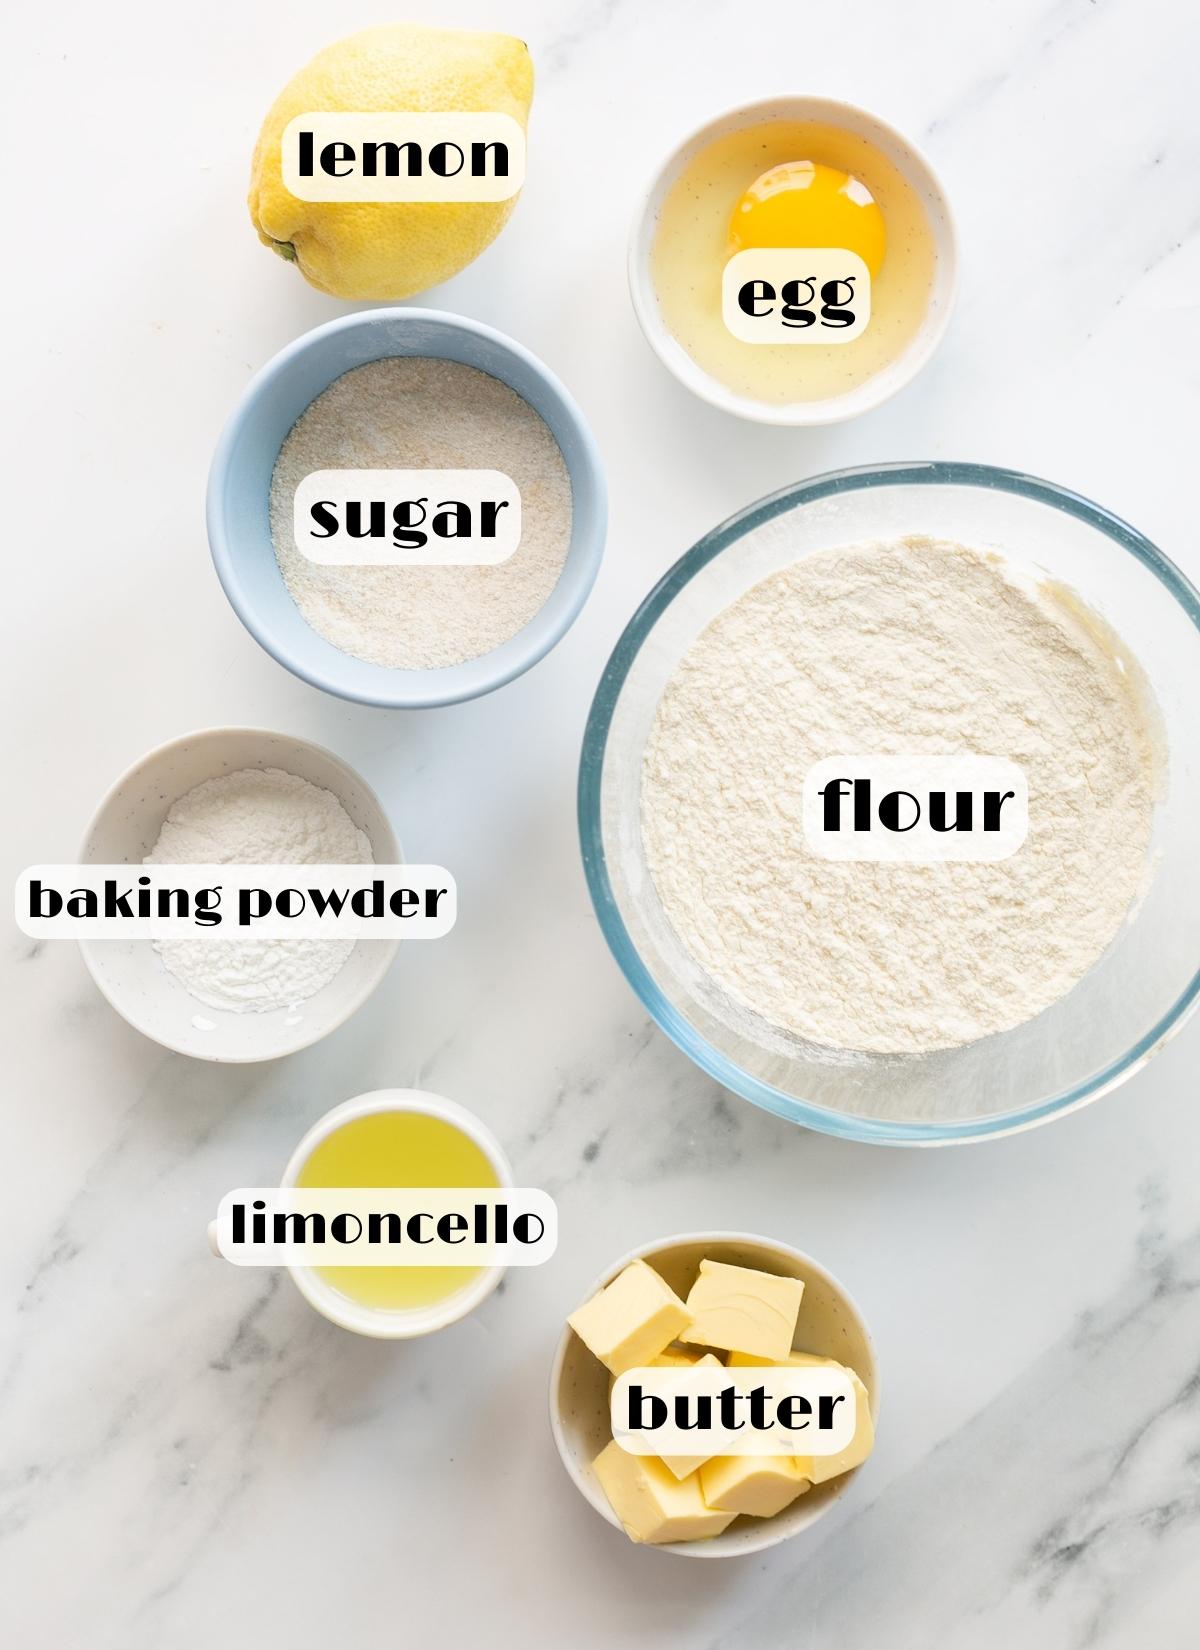 limoncello cookies ingredients: limoncello, lemon, flour, sugar, baking powder, egg, butter.